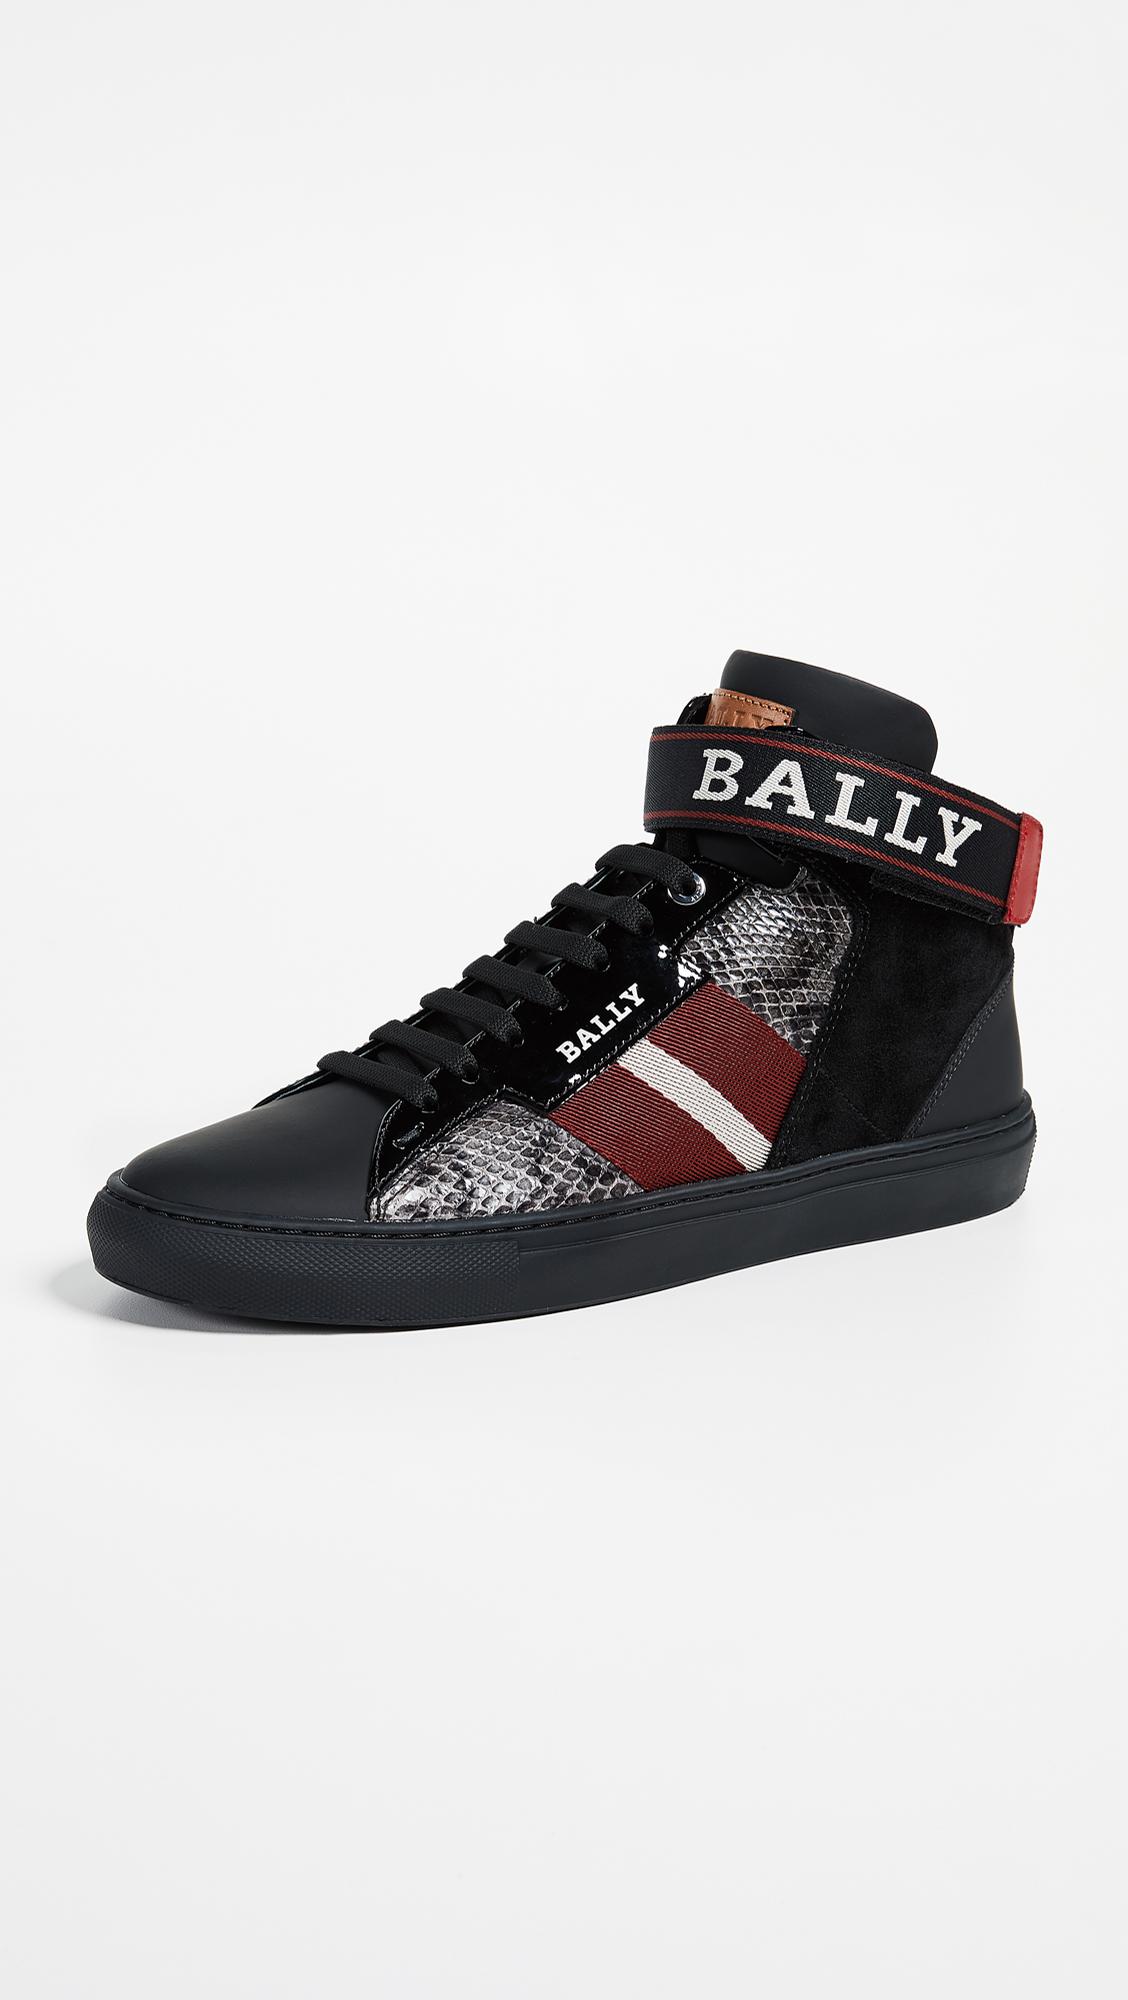 bally snakeskin shoes